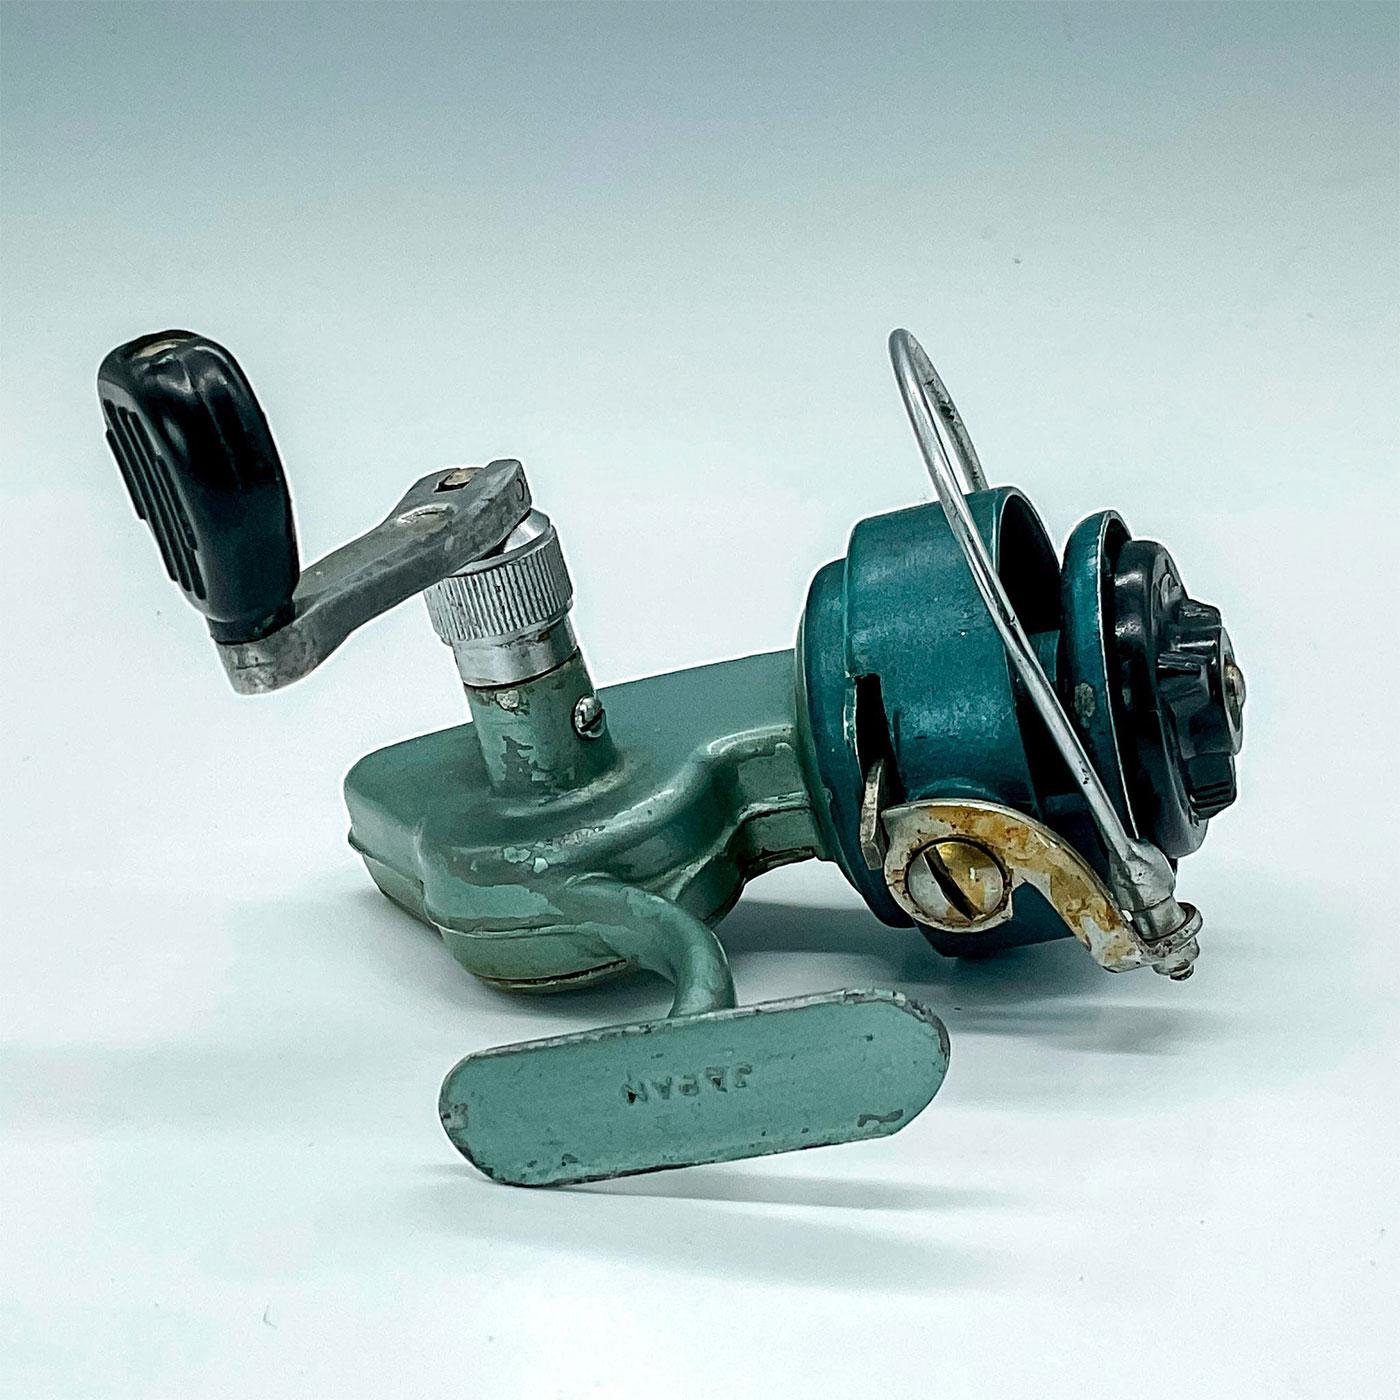 Vintage Spin Mitey Strength Ultralight Spinning Reel